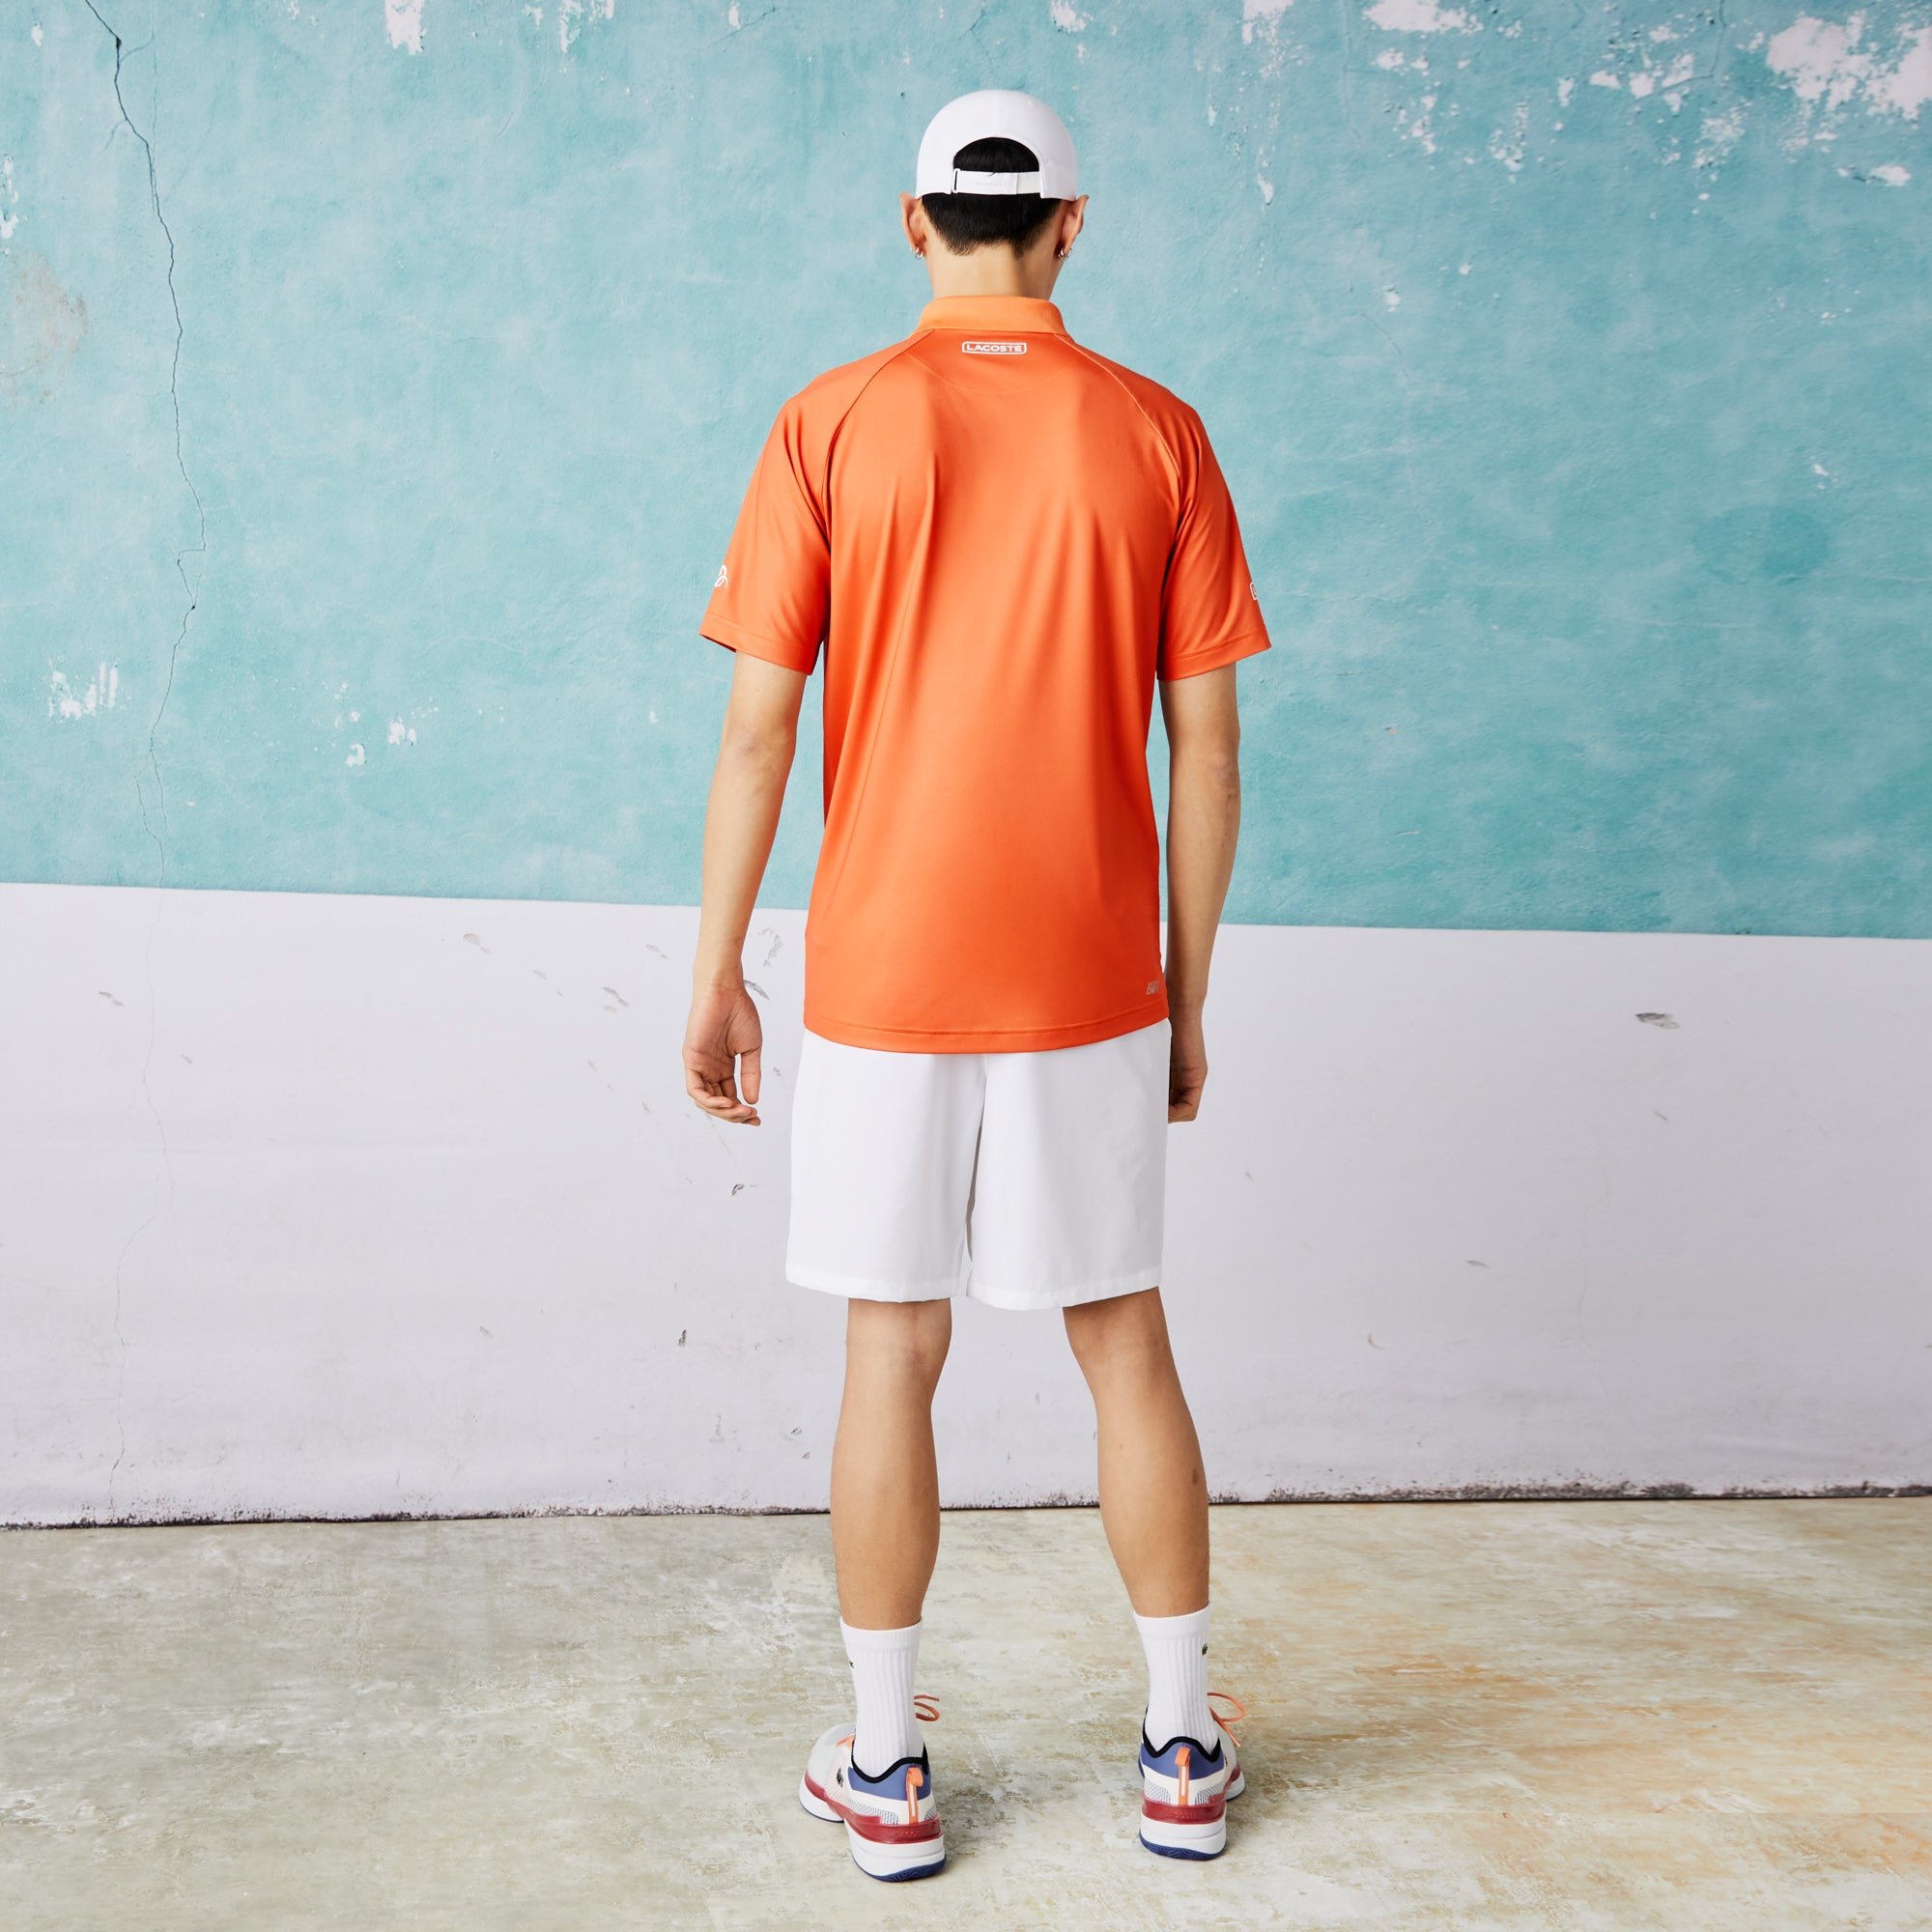 Lacoste Novak Djokovic Men's Tennis Polo Orange (2)